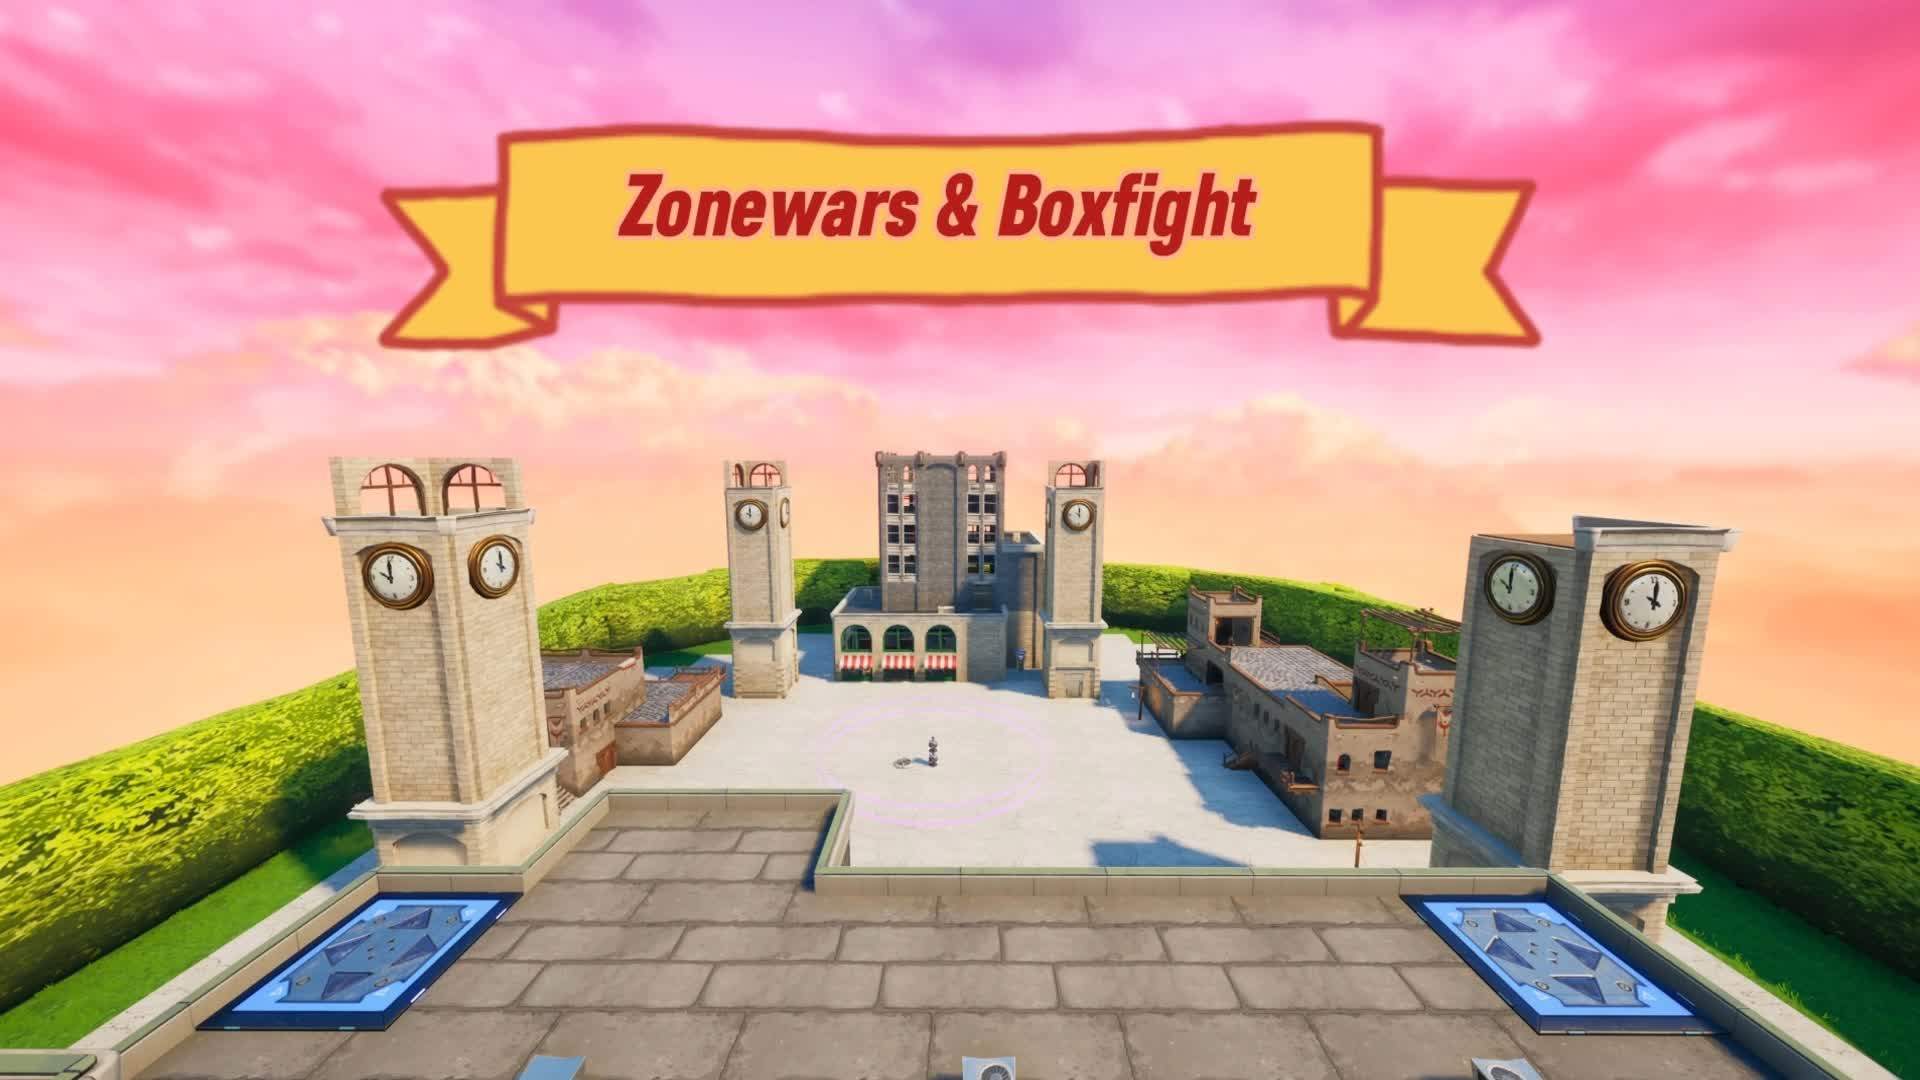 Zone wars & Boxfight